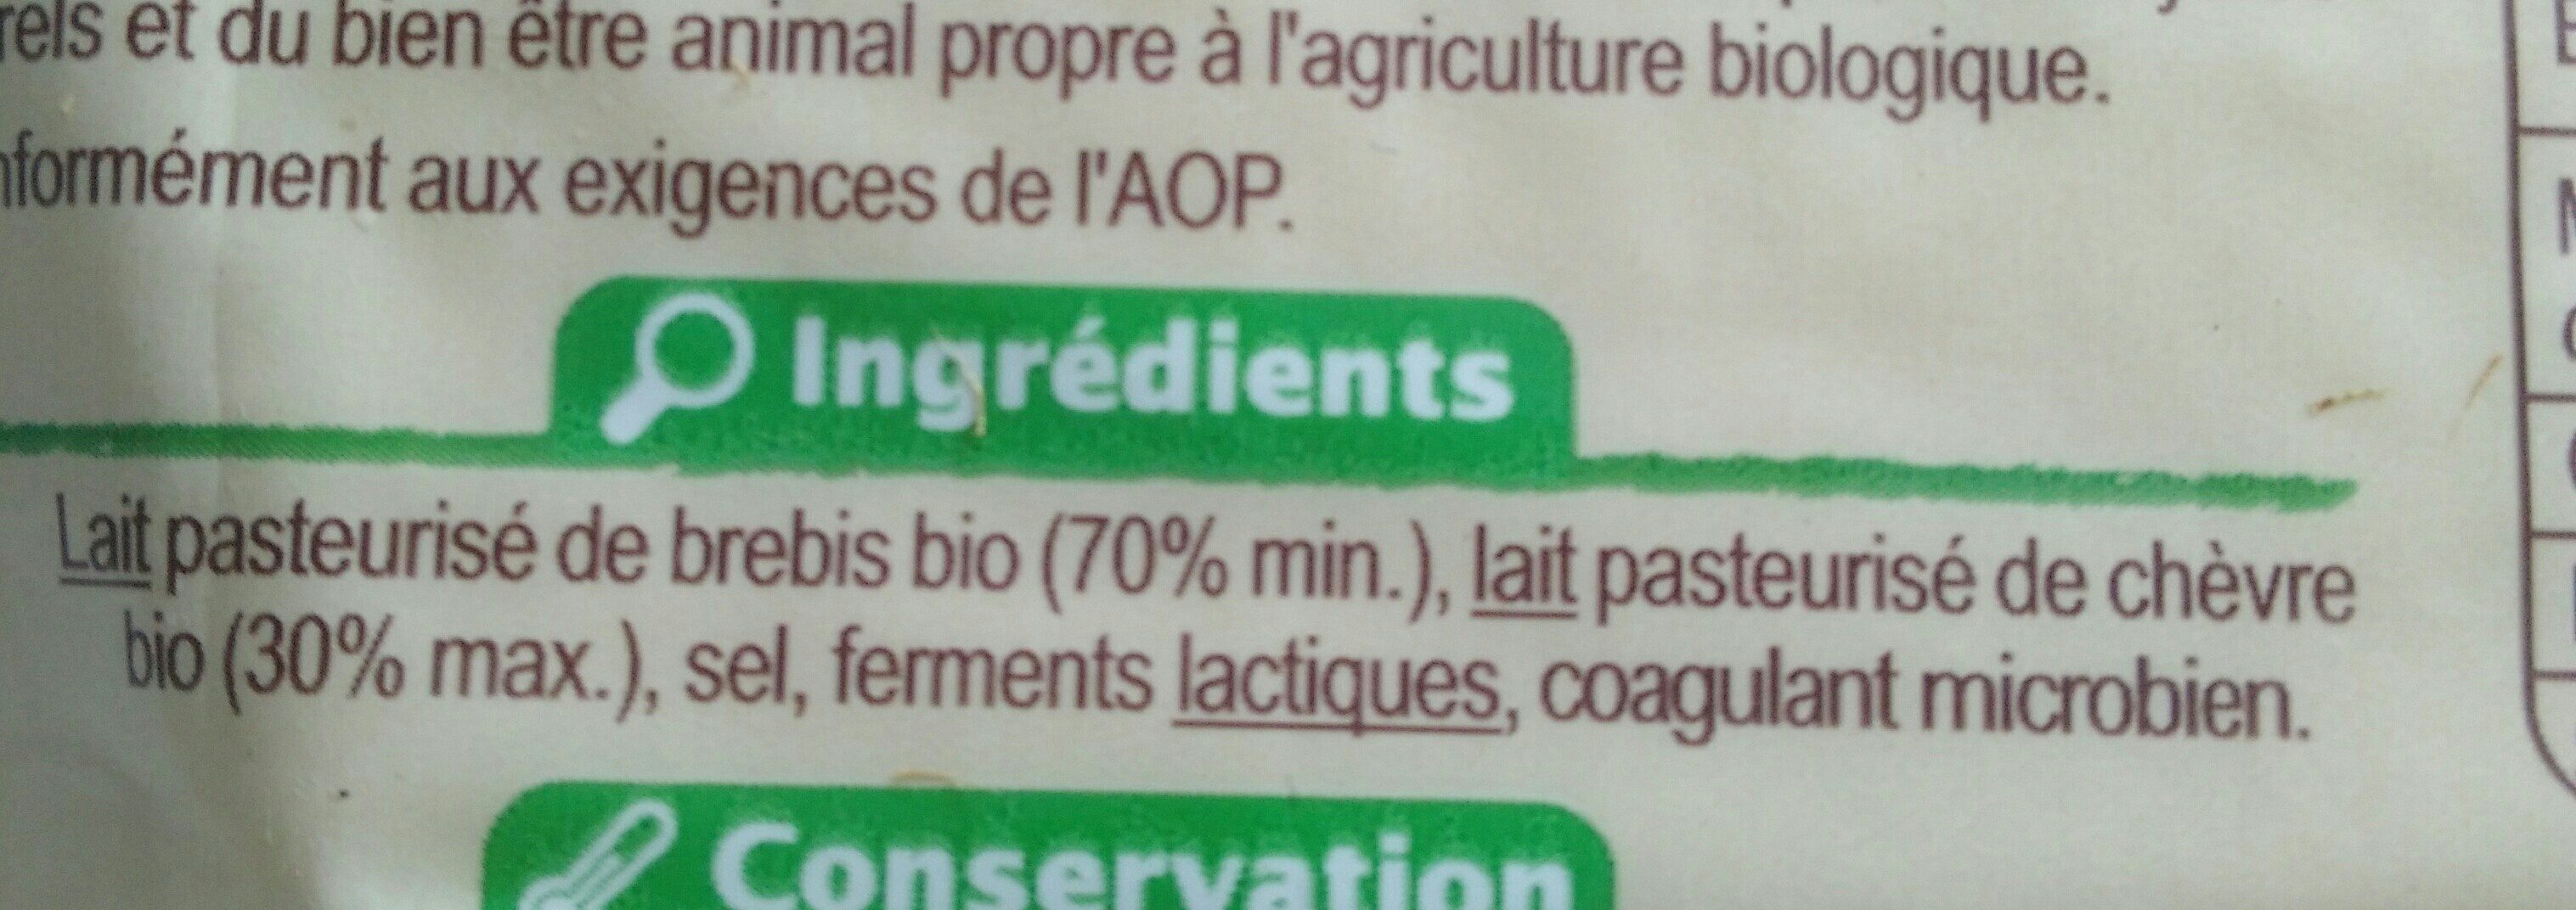 Feta - Ingredienti - fr